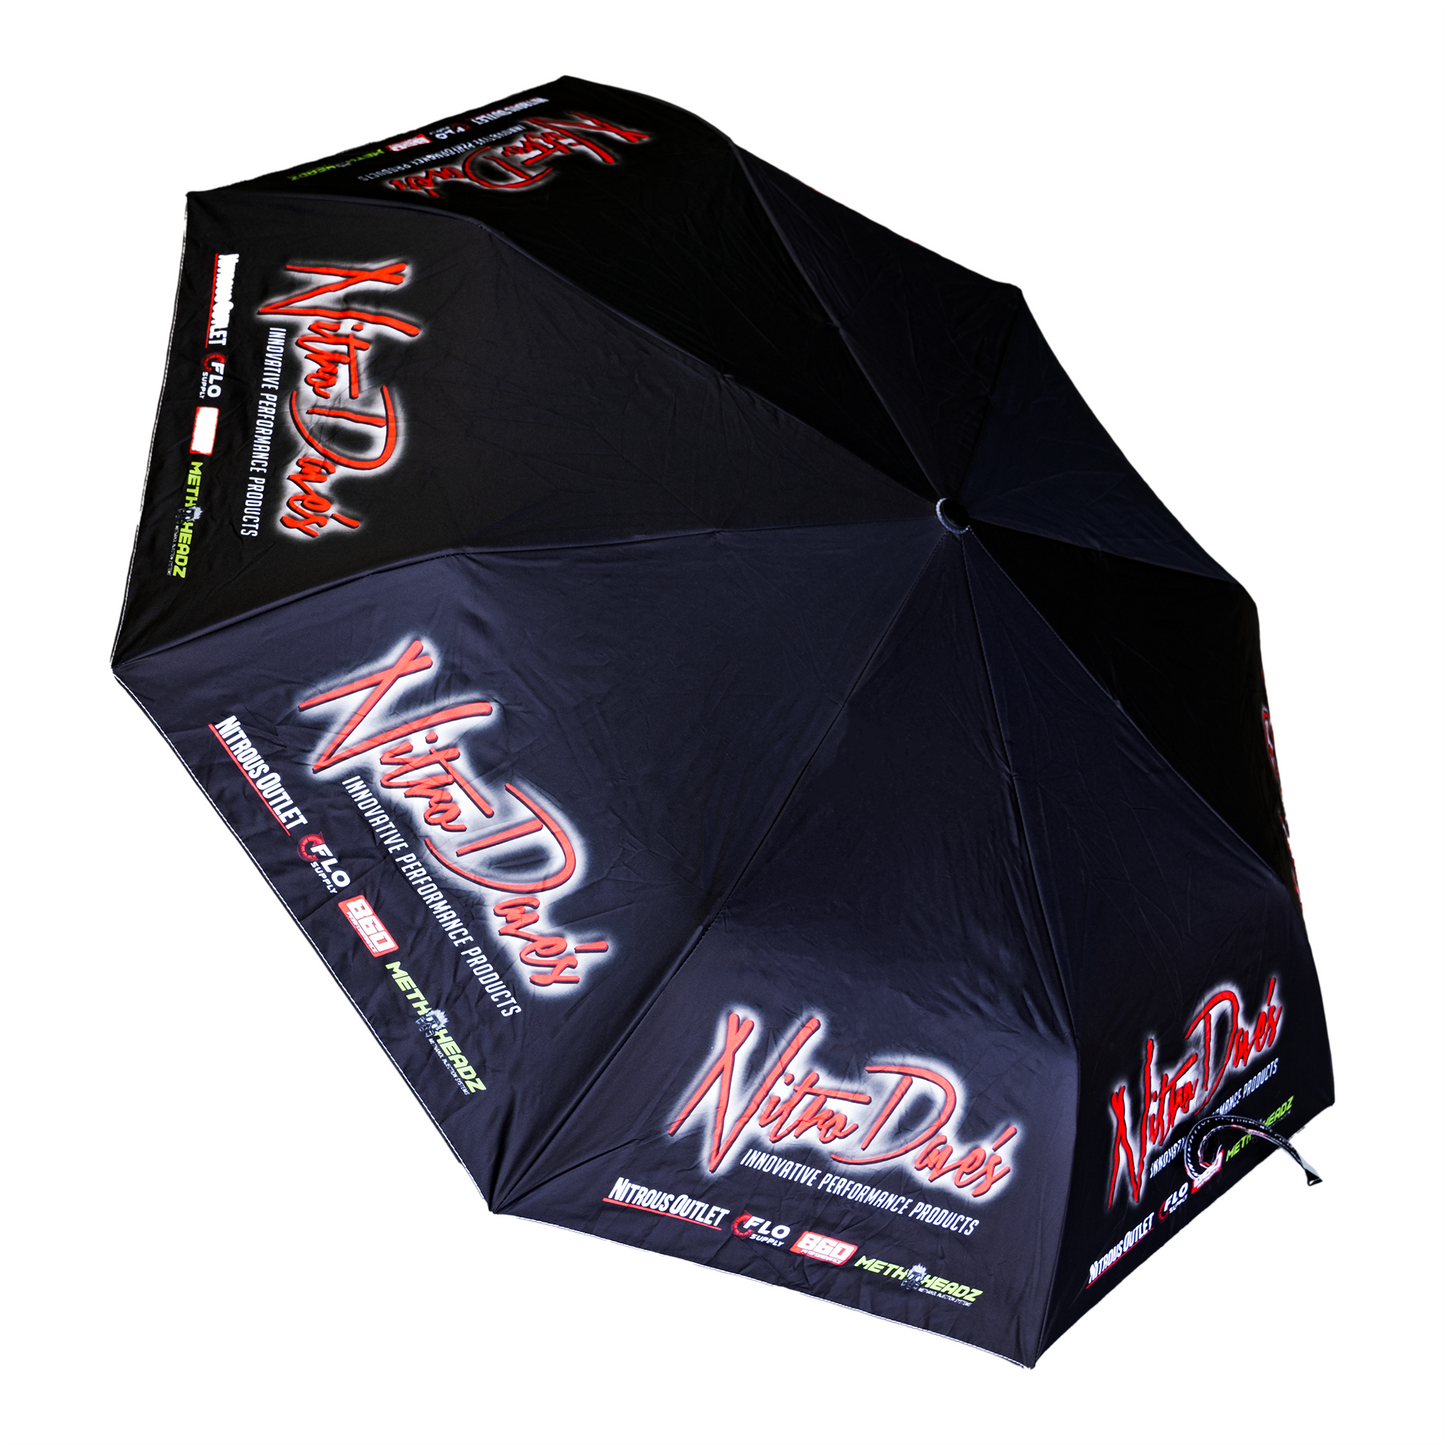 Nitro Dave's Umbrella